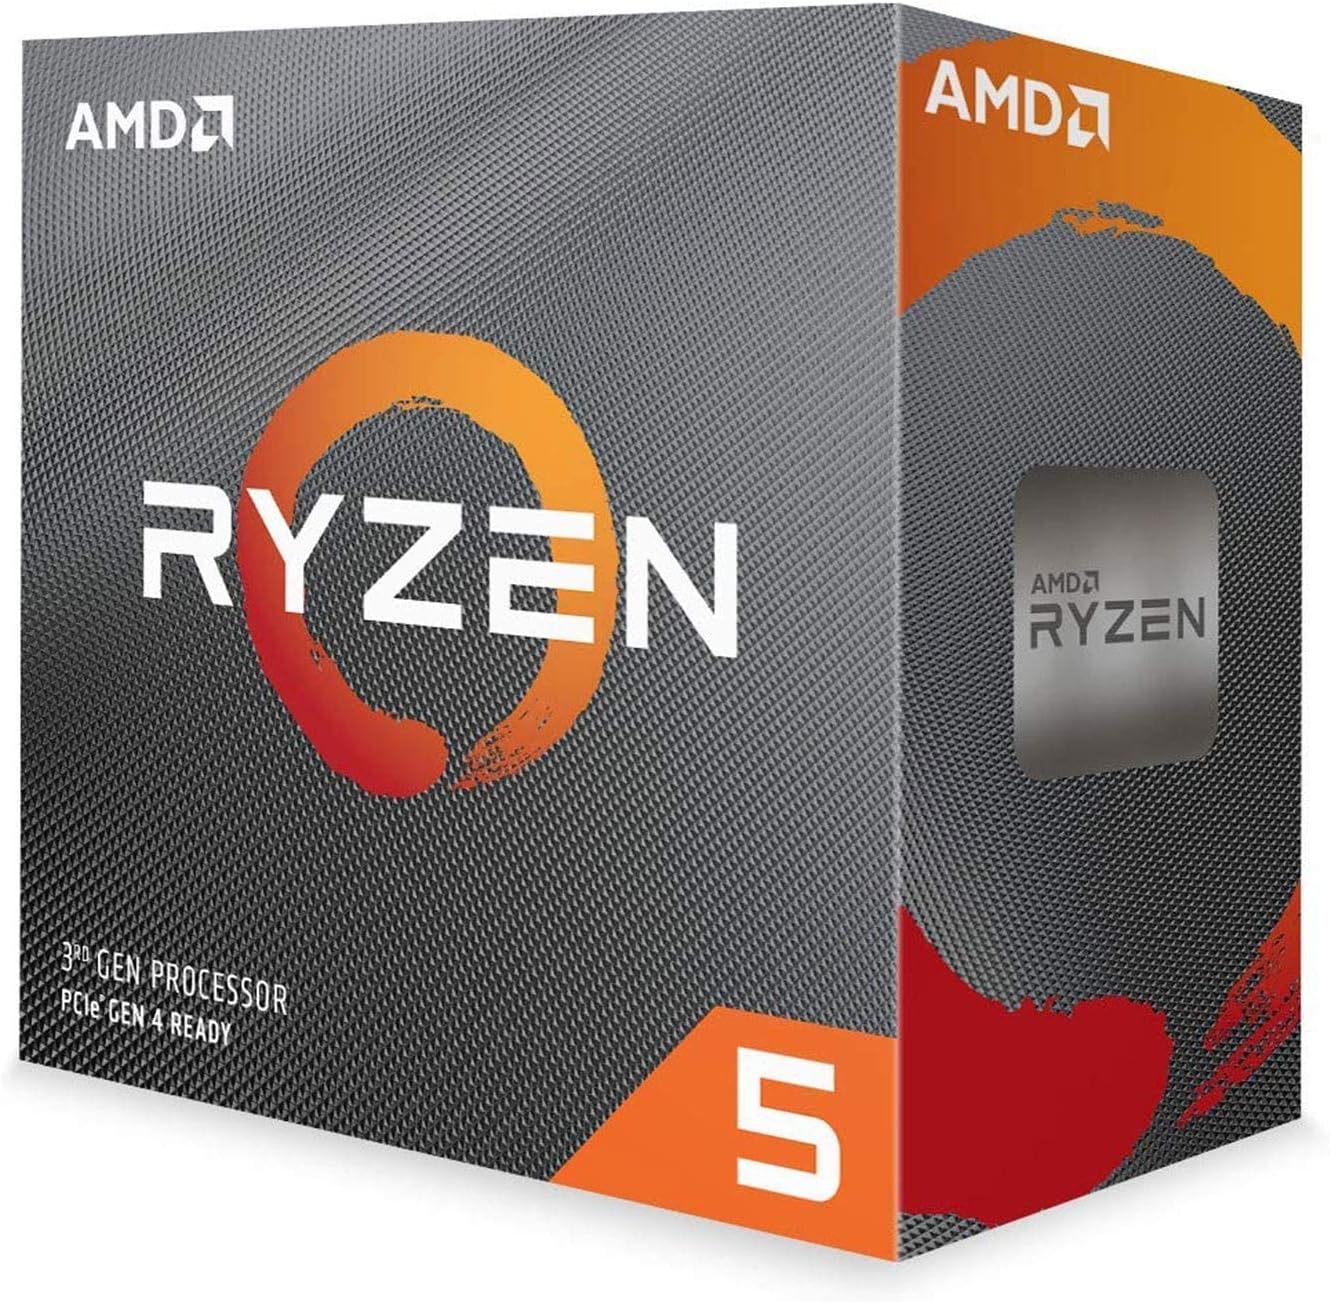 AMD Ryzen 5 3600 Processor - 6 cores, 12 threads, 4.2 GHz boost clock, 65W TDP 0730143314299